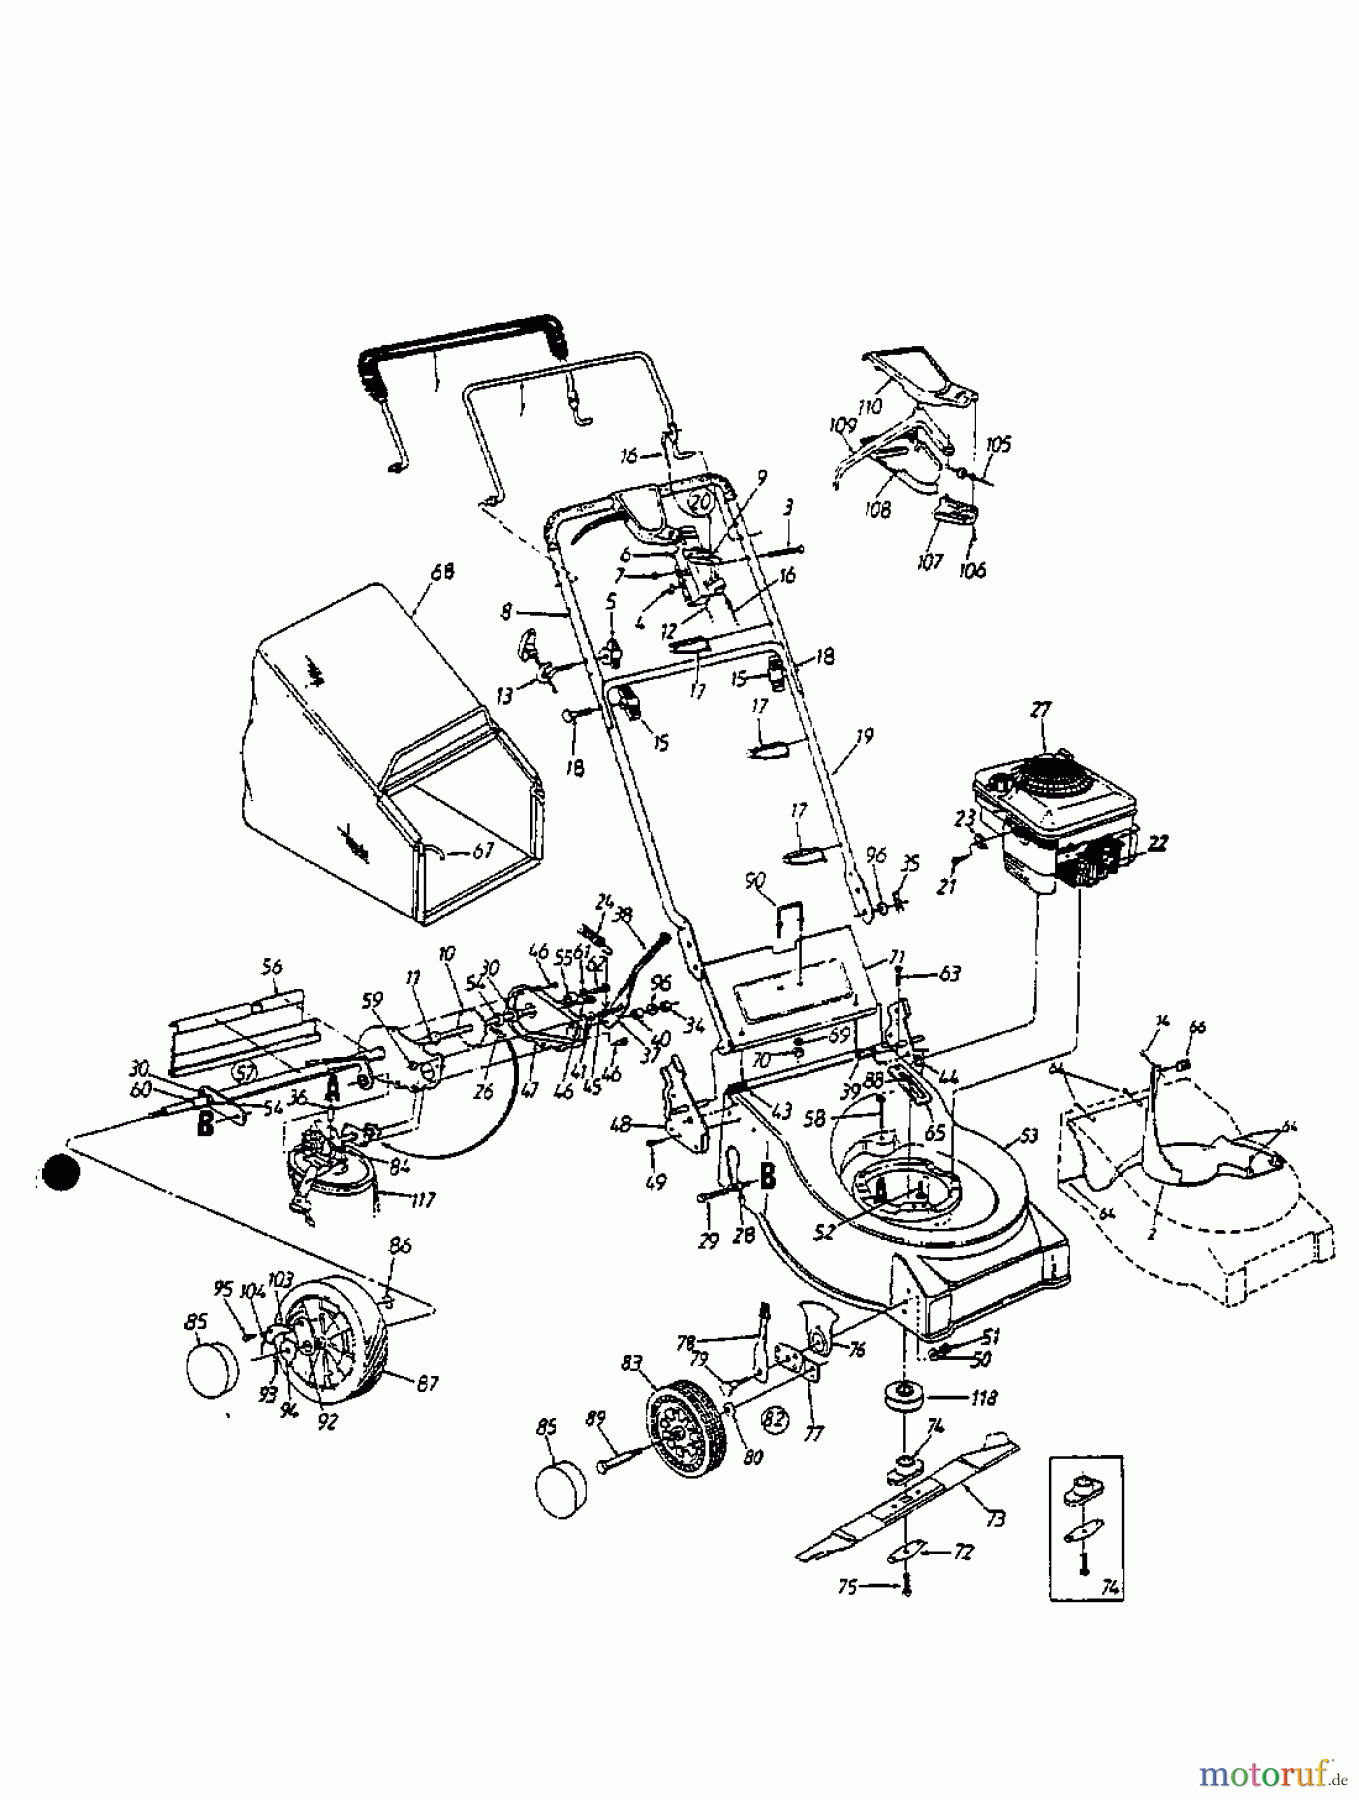  Lawnflite Petrol mower self propelled 383 SP 12A-682A611  (1998) Basic machine